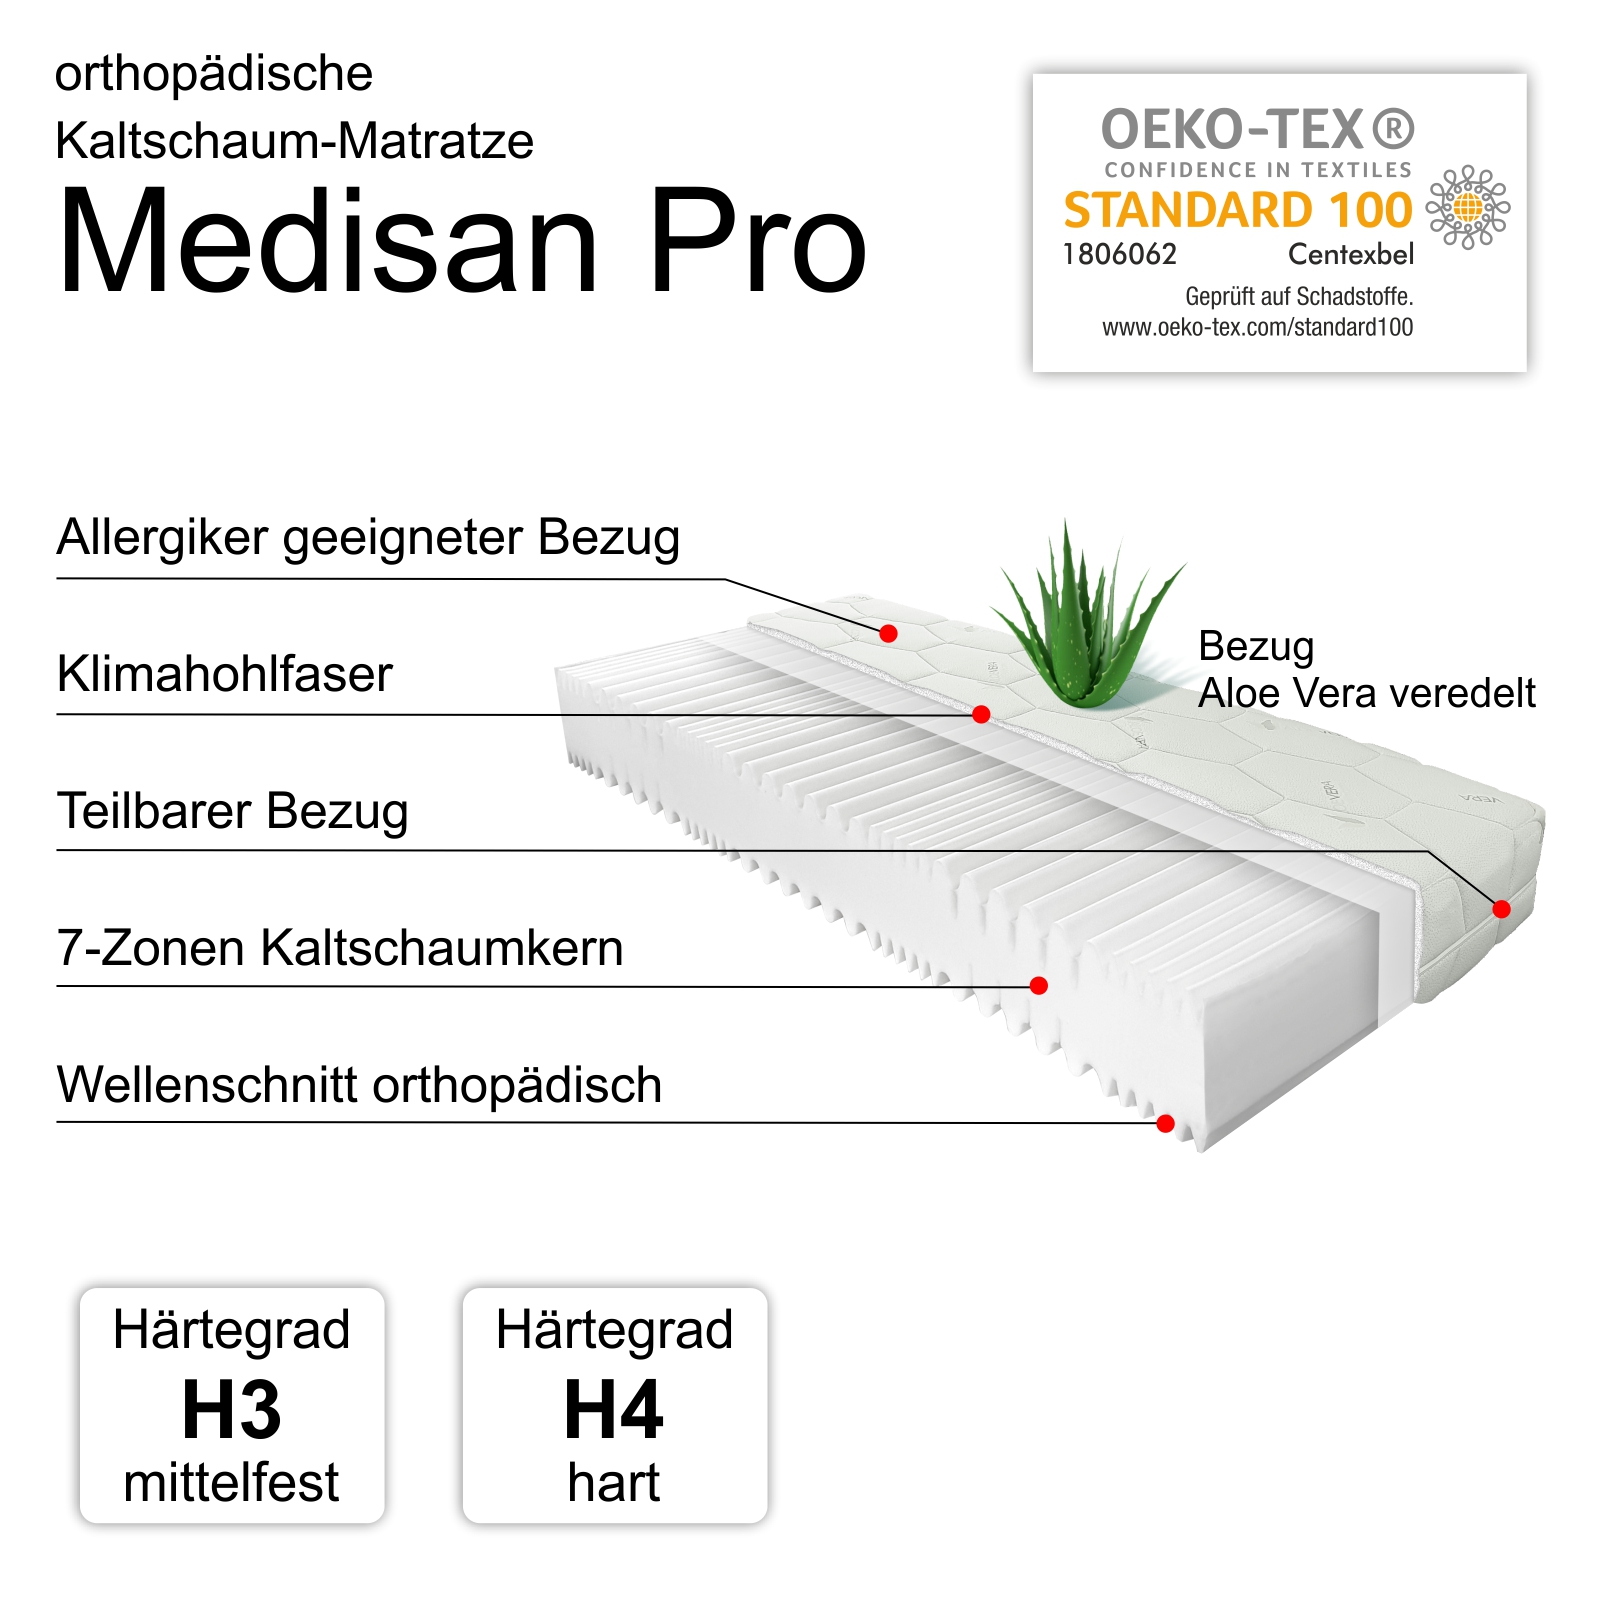 Kaltschaummatratze Medisan Pro, 140x200cm, Härtegrad H4, 7-Zonen Profil